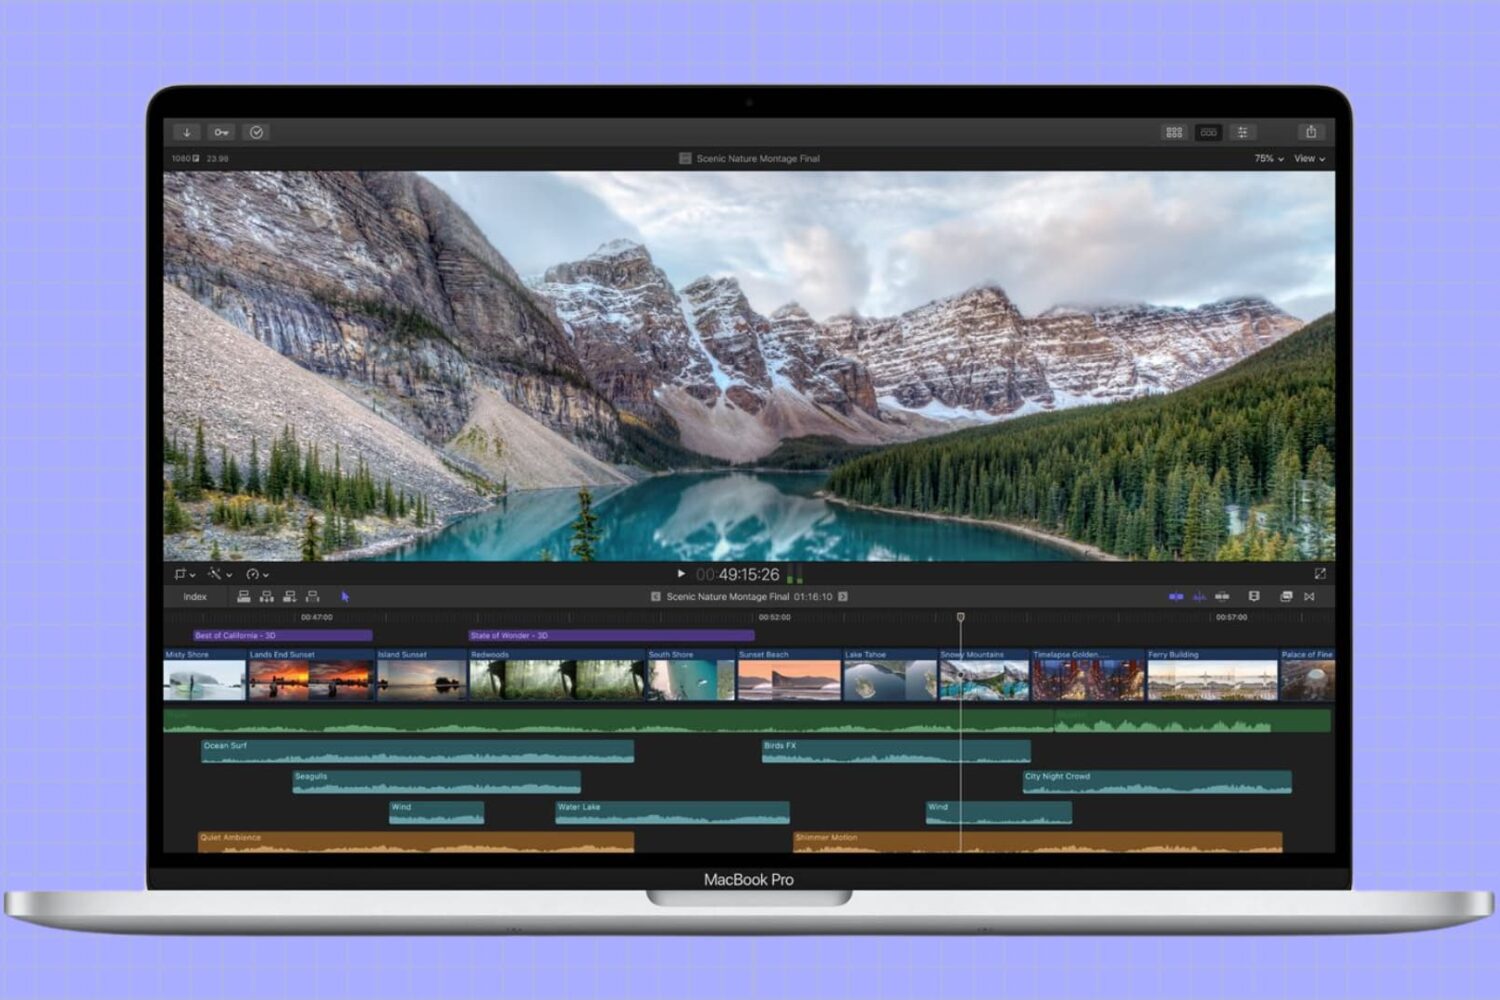 Video Editor open on MacBook Pro